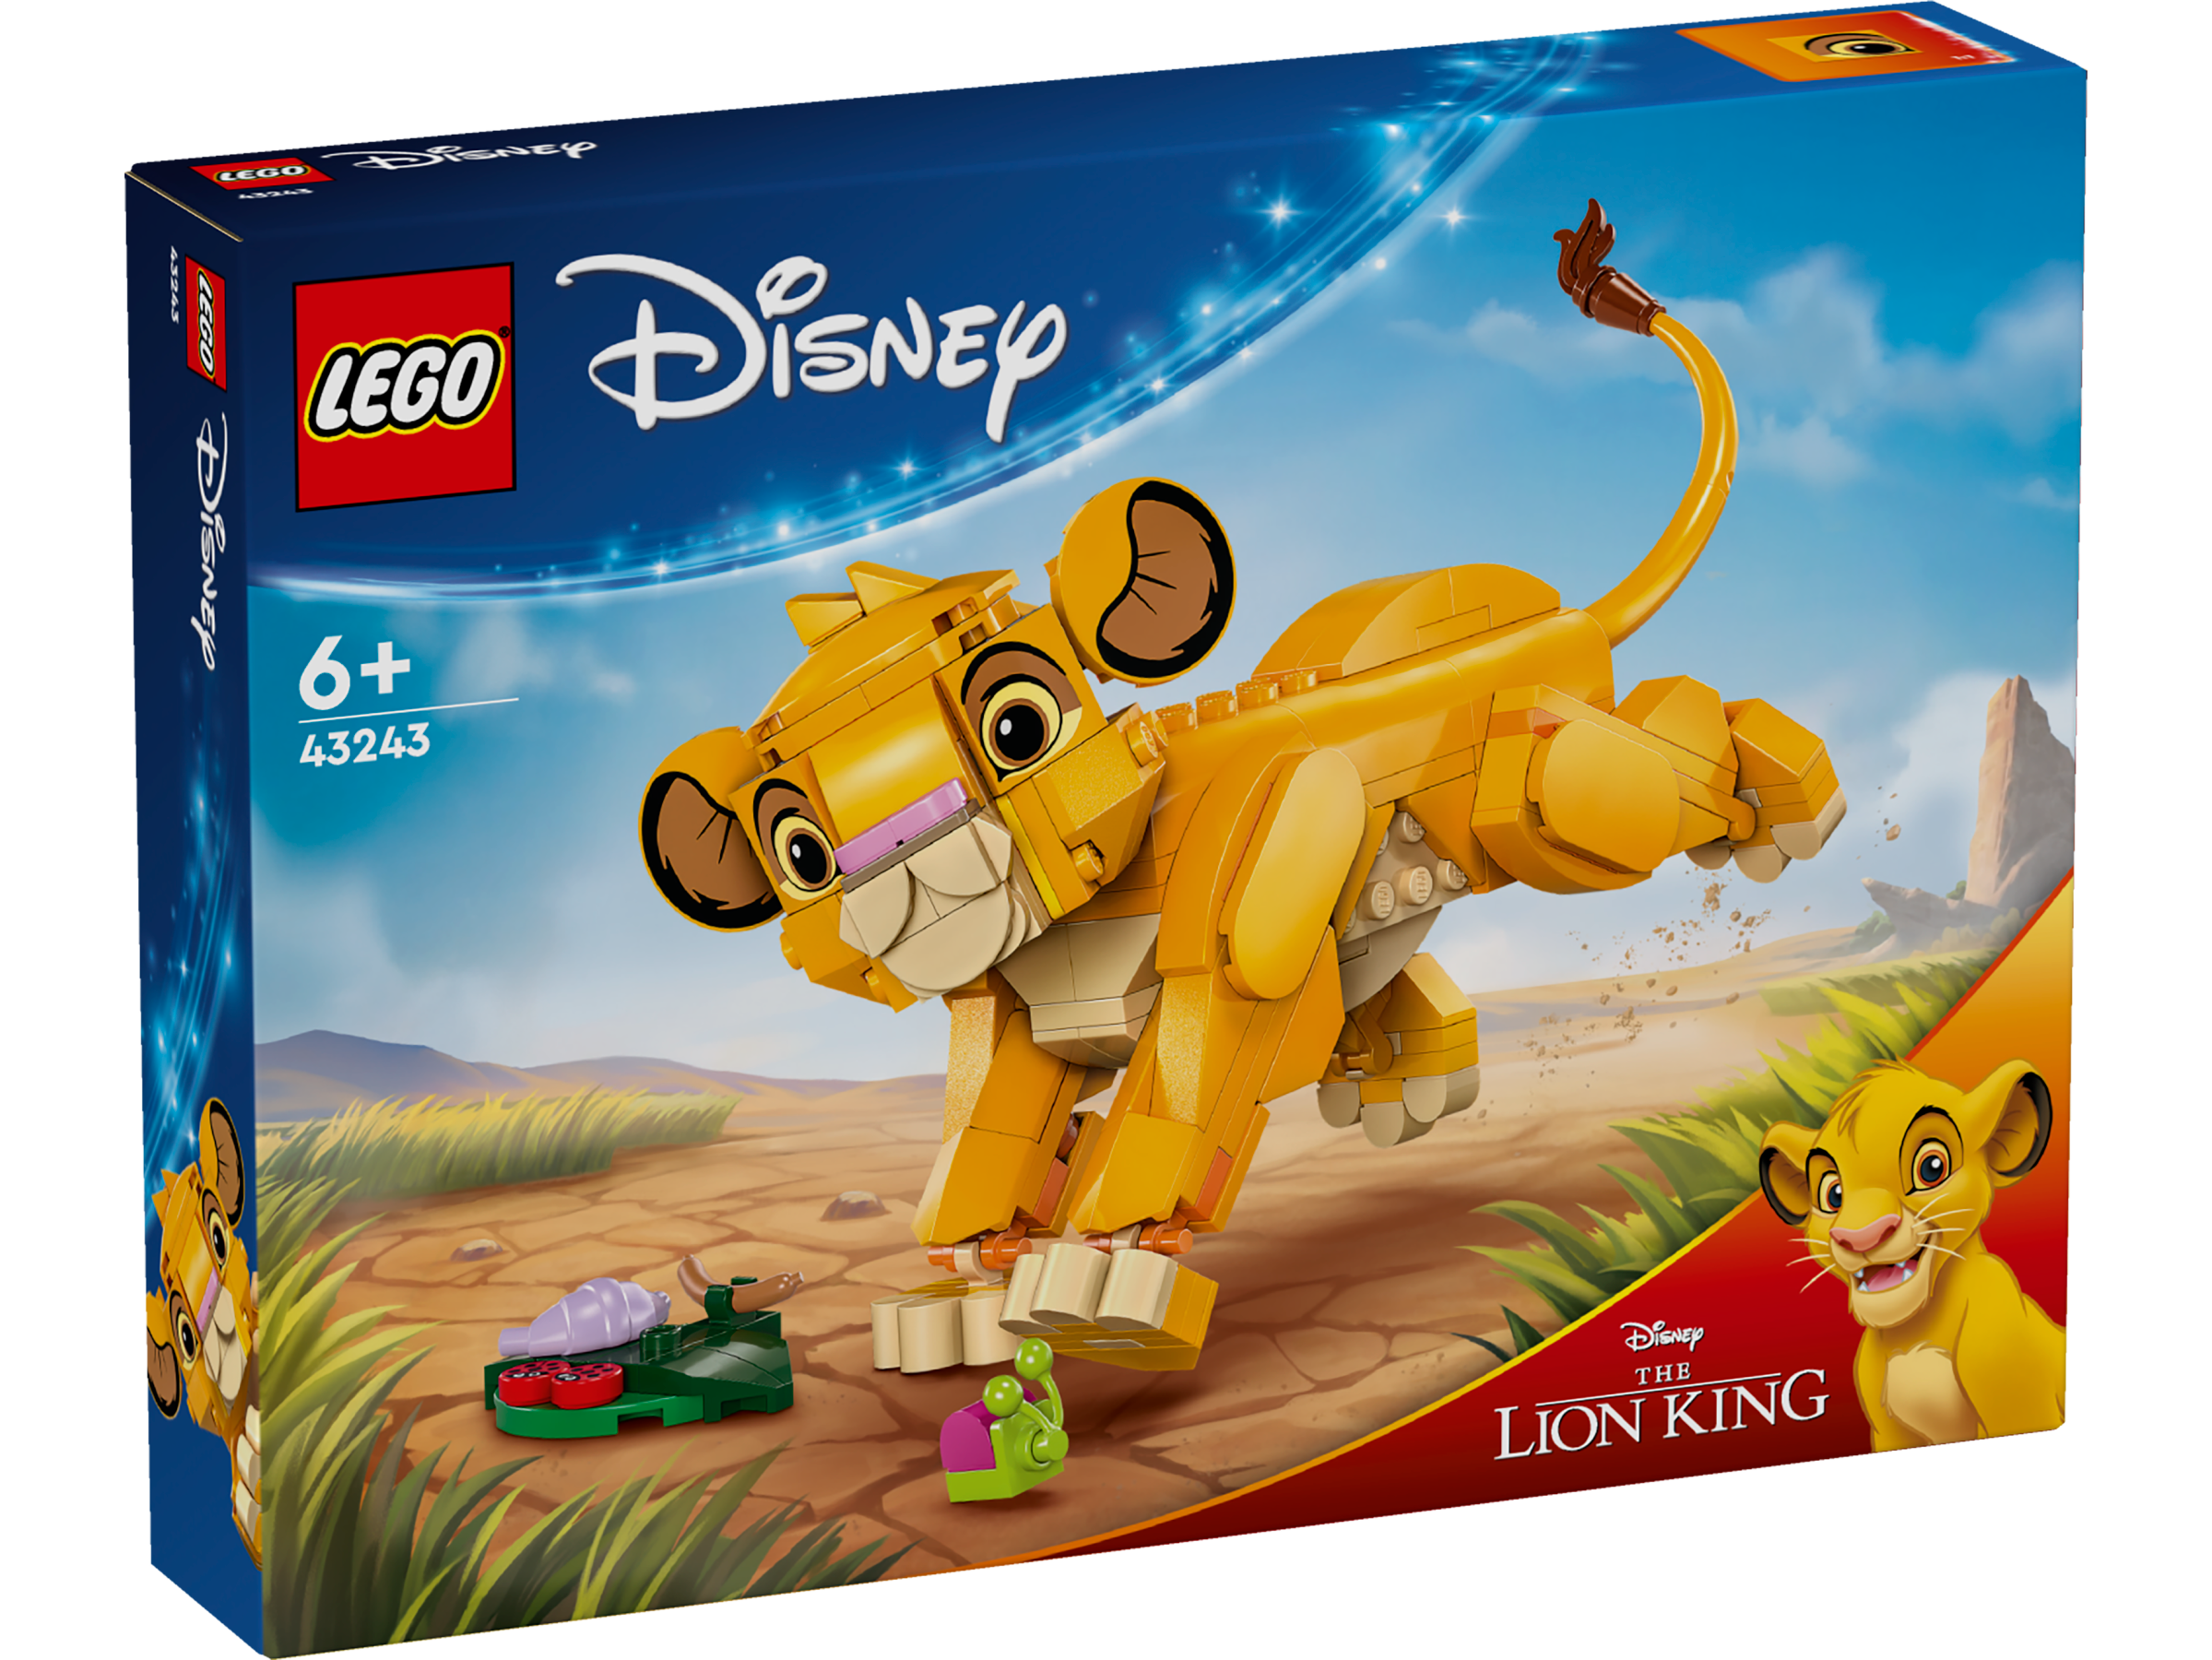 Lego 43243 Simba the Lion King Cub